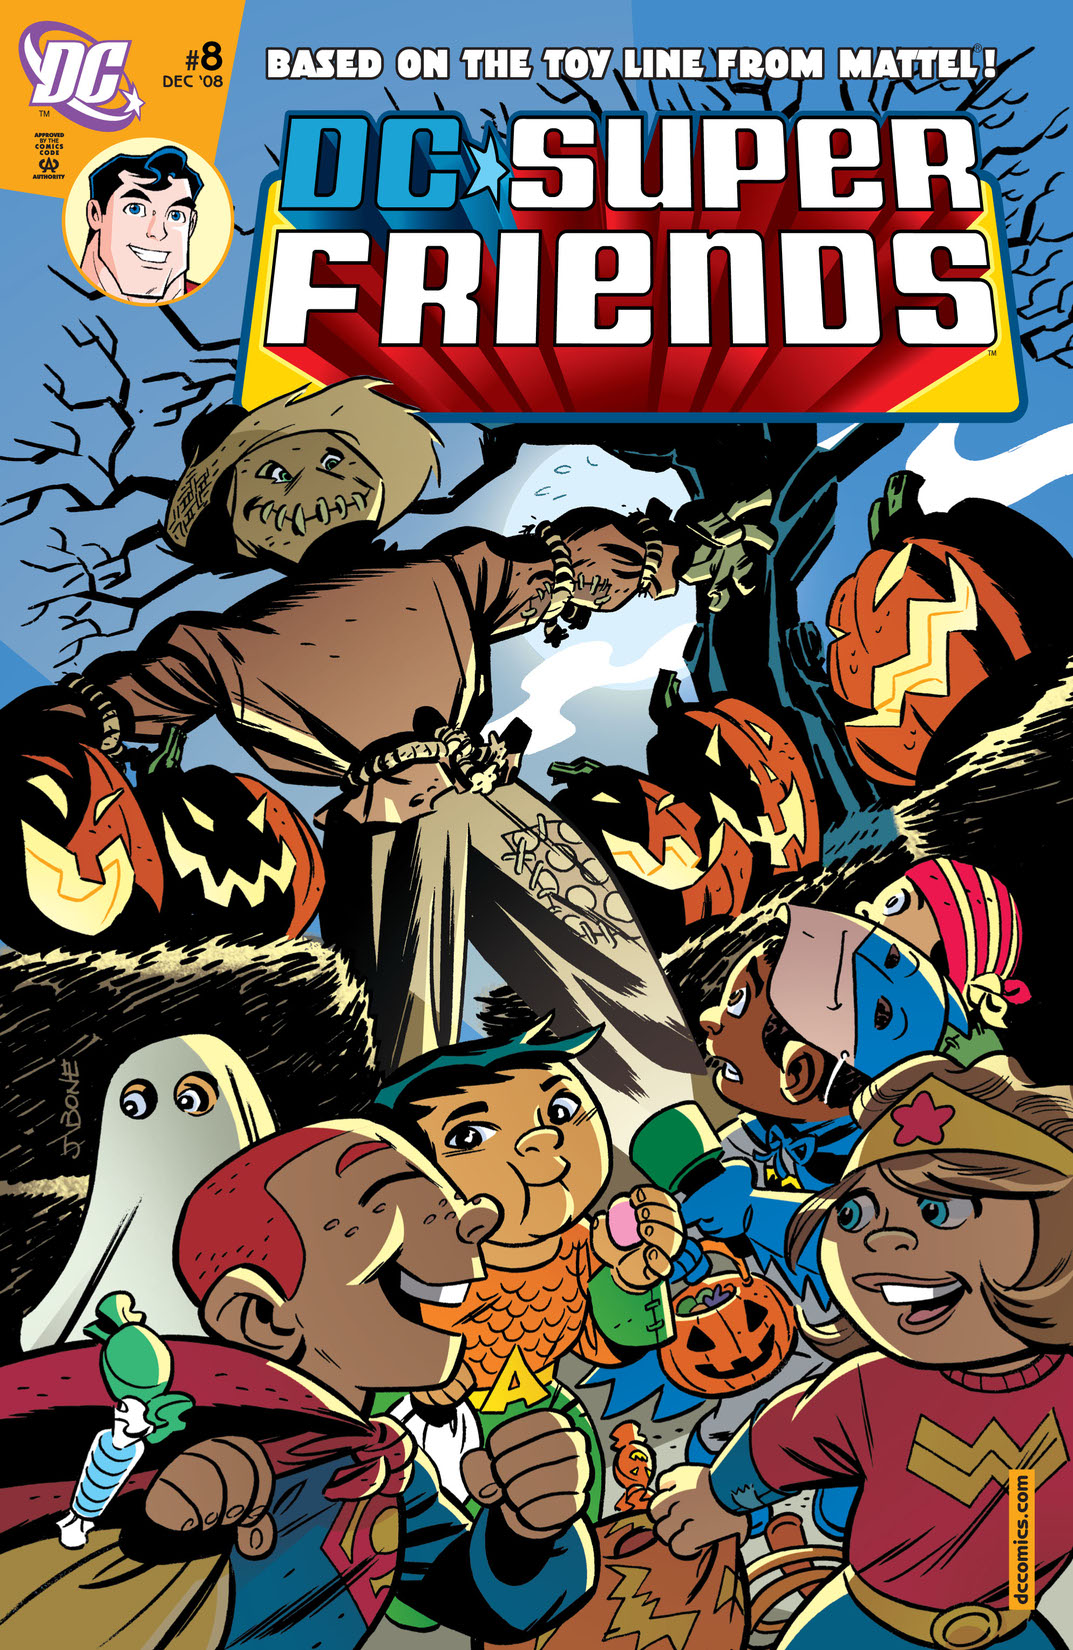 Super Friends (2008-) #8 preview images